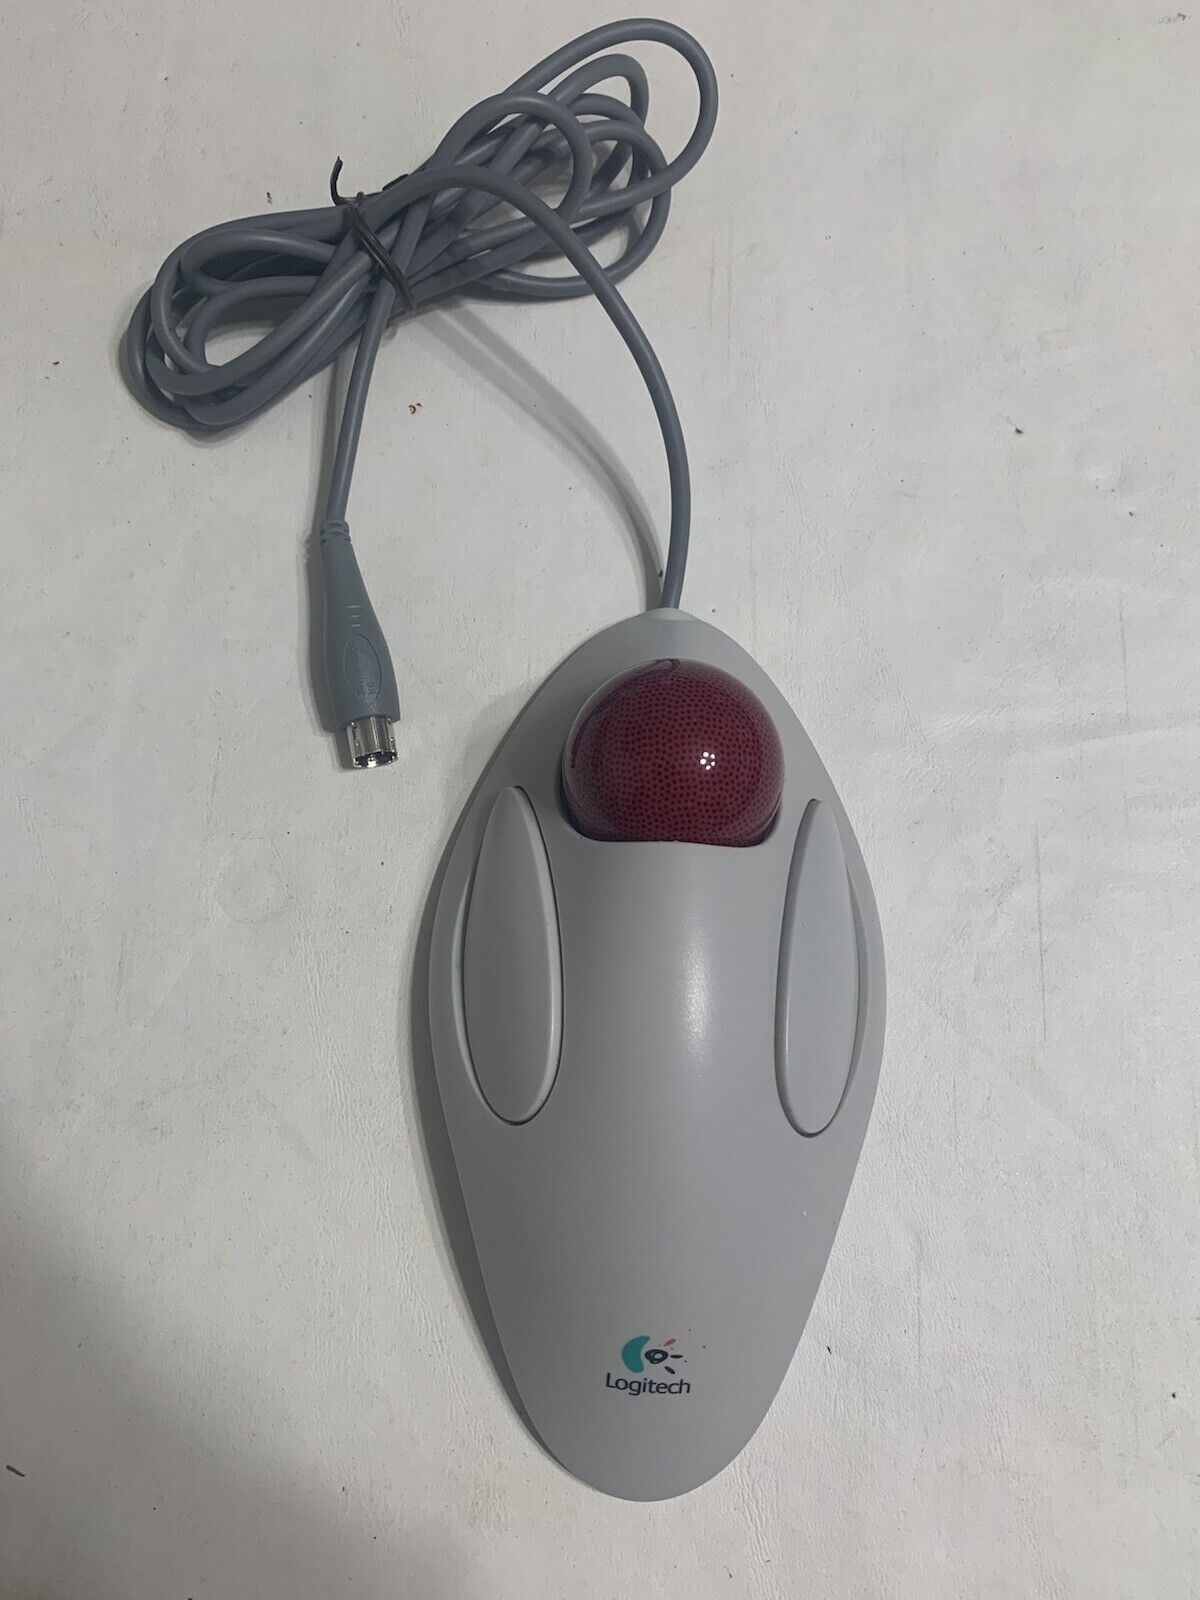 Logitech Trackball Marble Mouse T-CM14 Computer 804292-0000 Vintage